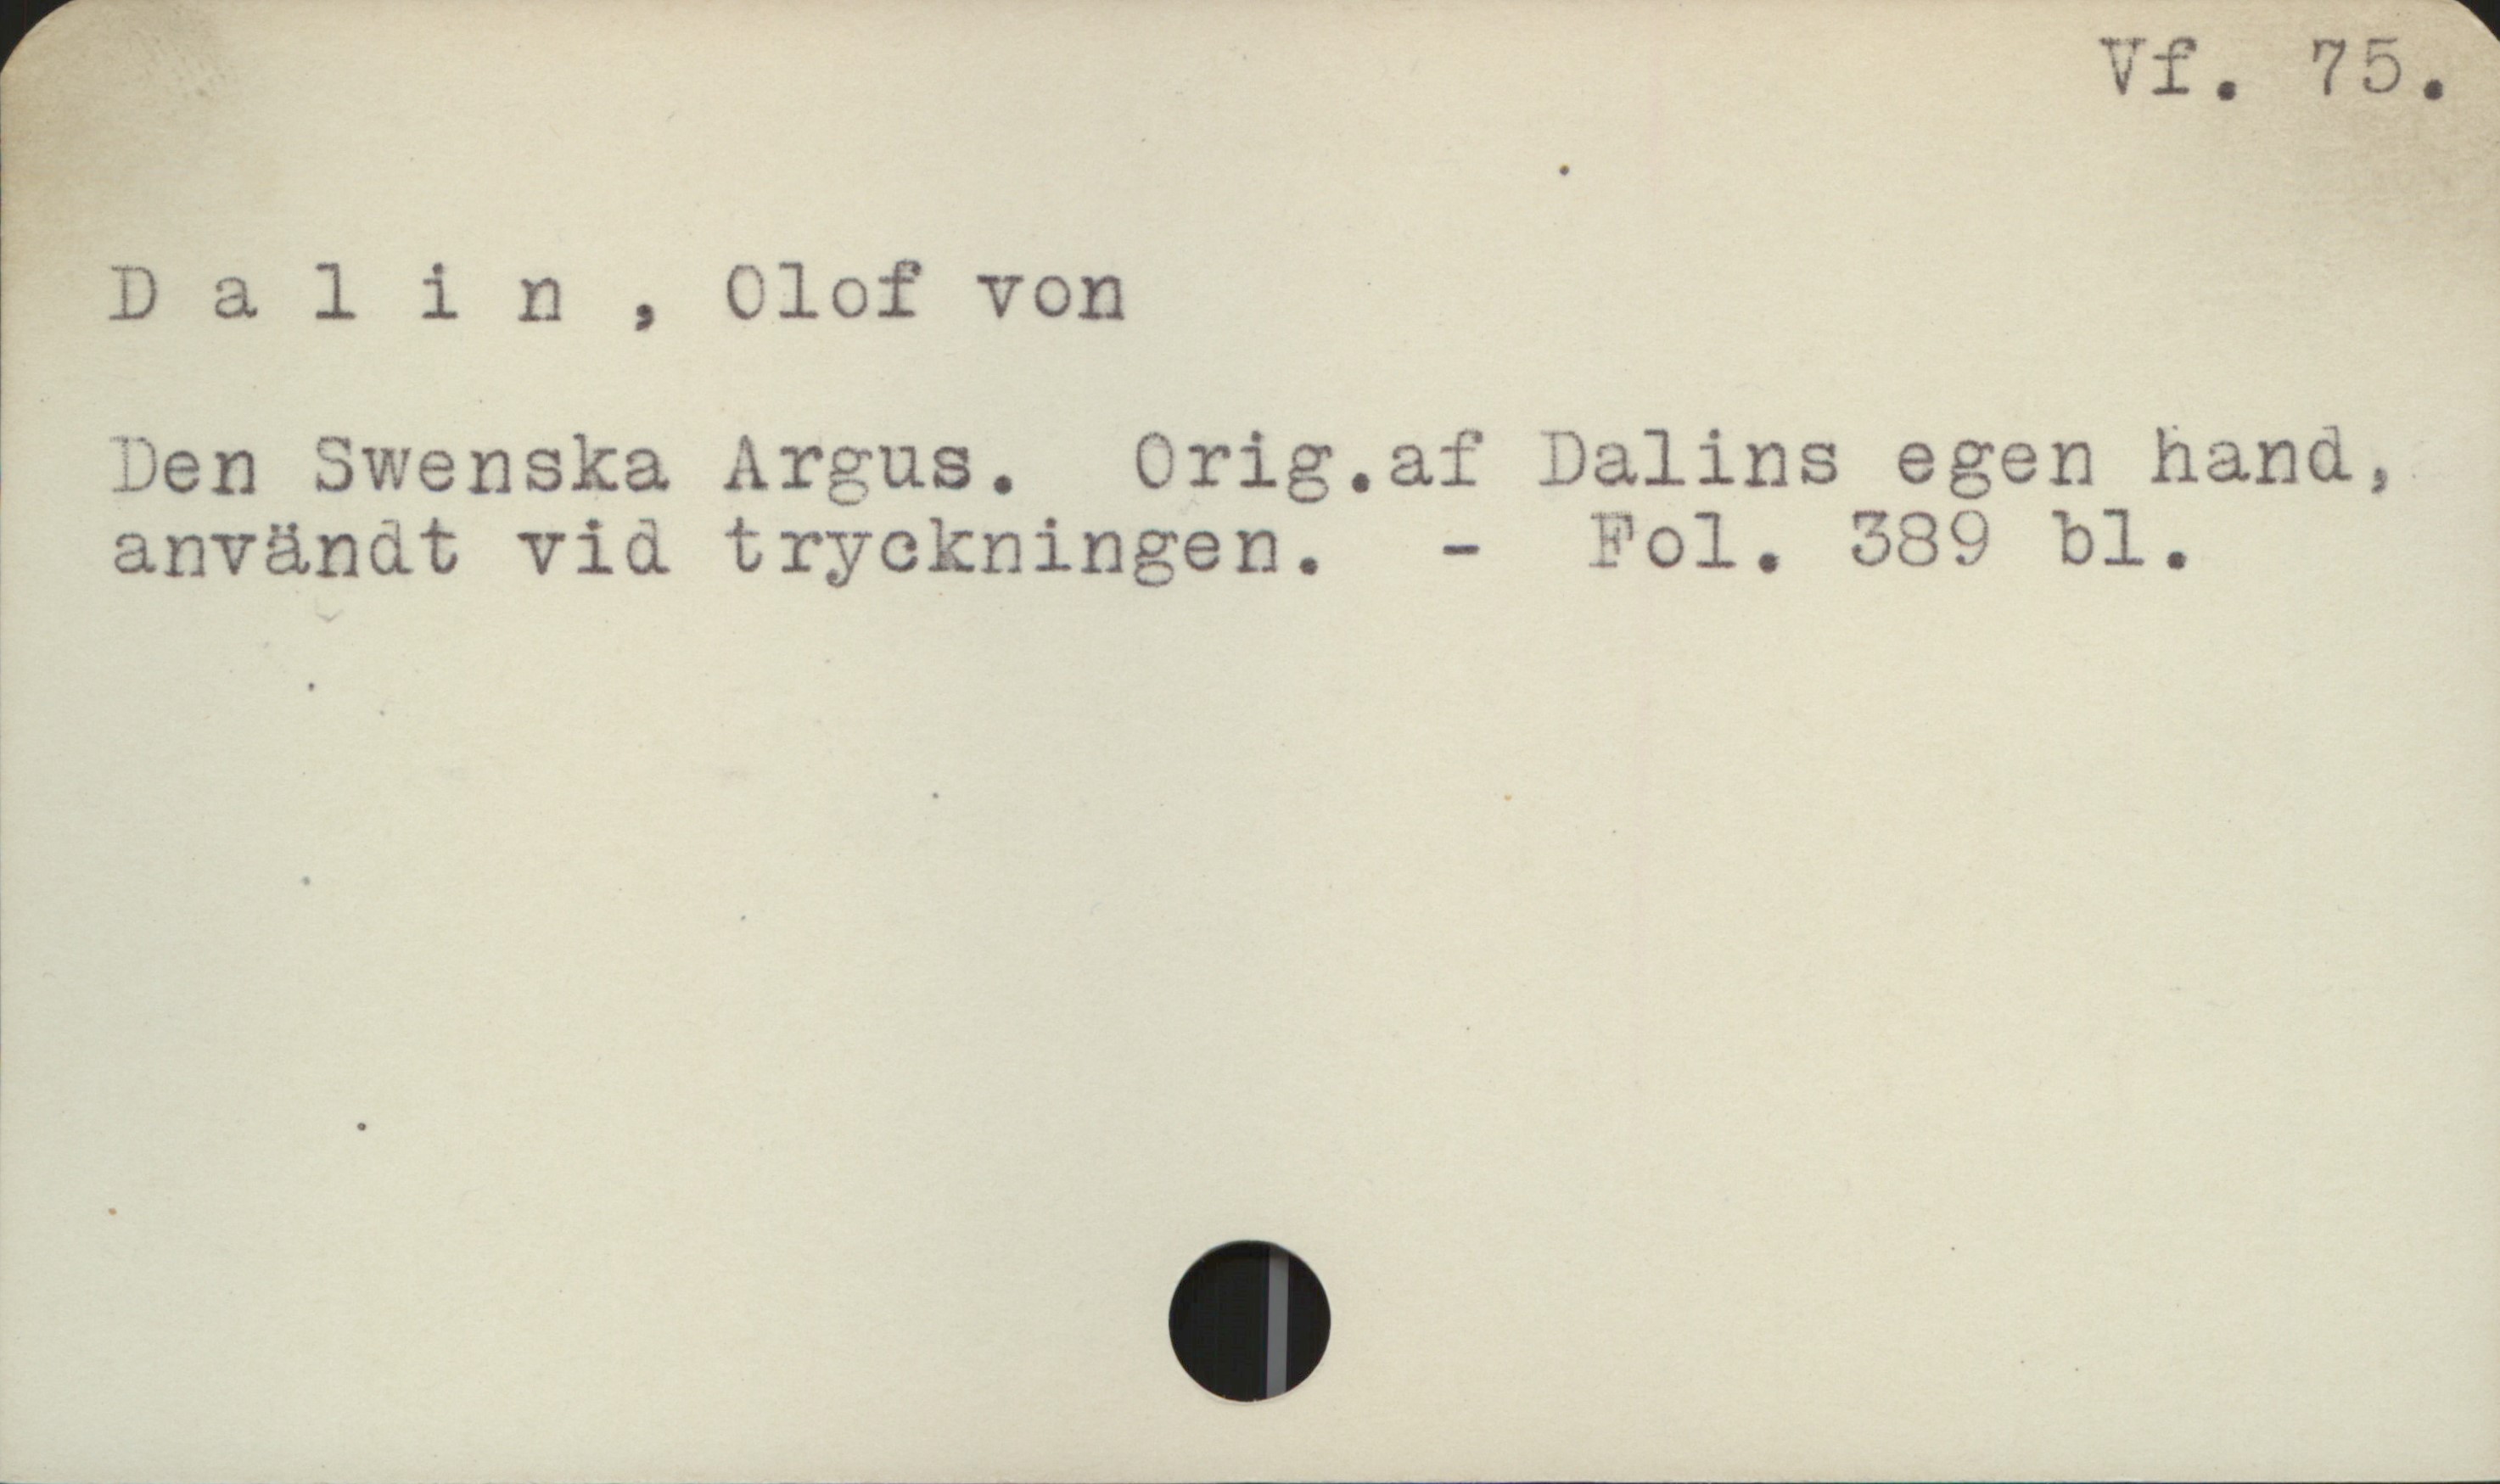 Dalin, Olof von Vf. 75.
Dalin, Olof von
Den Swenska Argus. Orig.af Dalins egen hand,
användt vid tryckningen. - Fol. 389 bl.